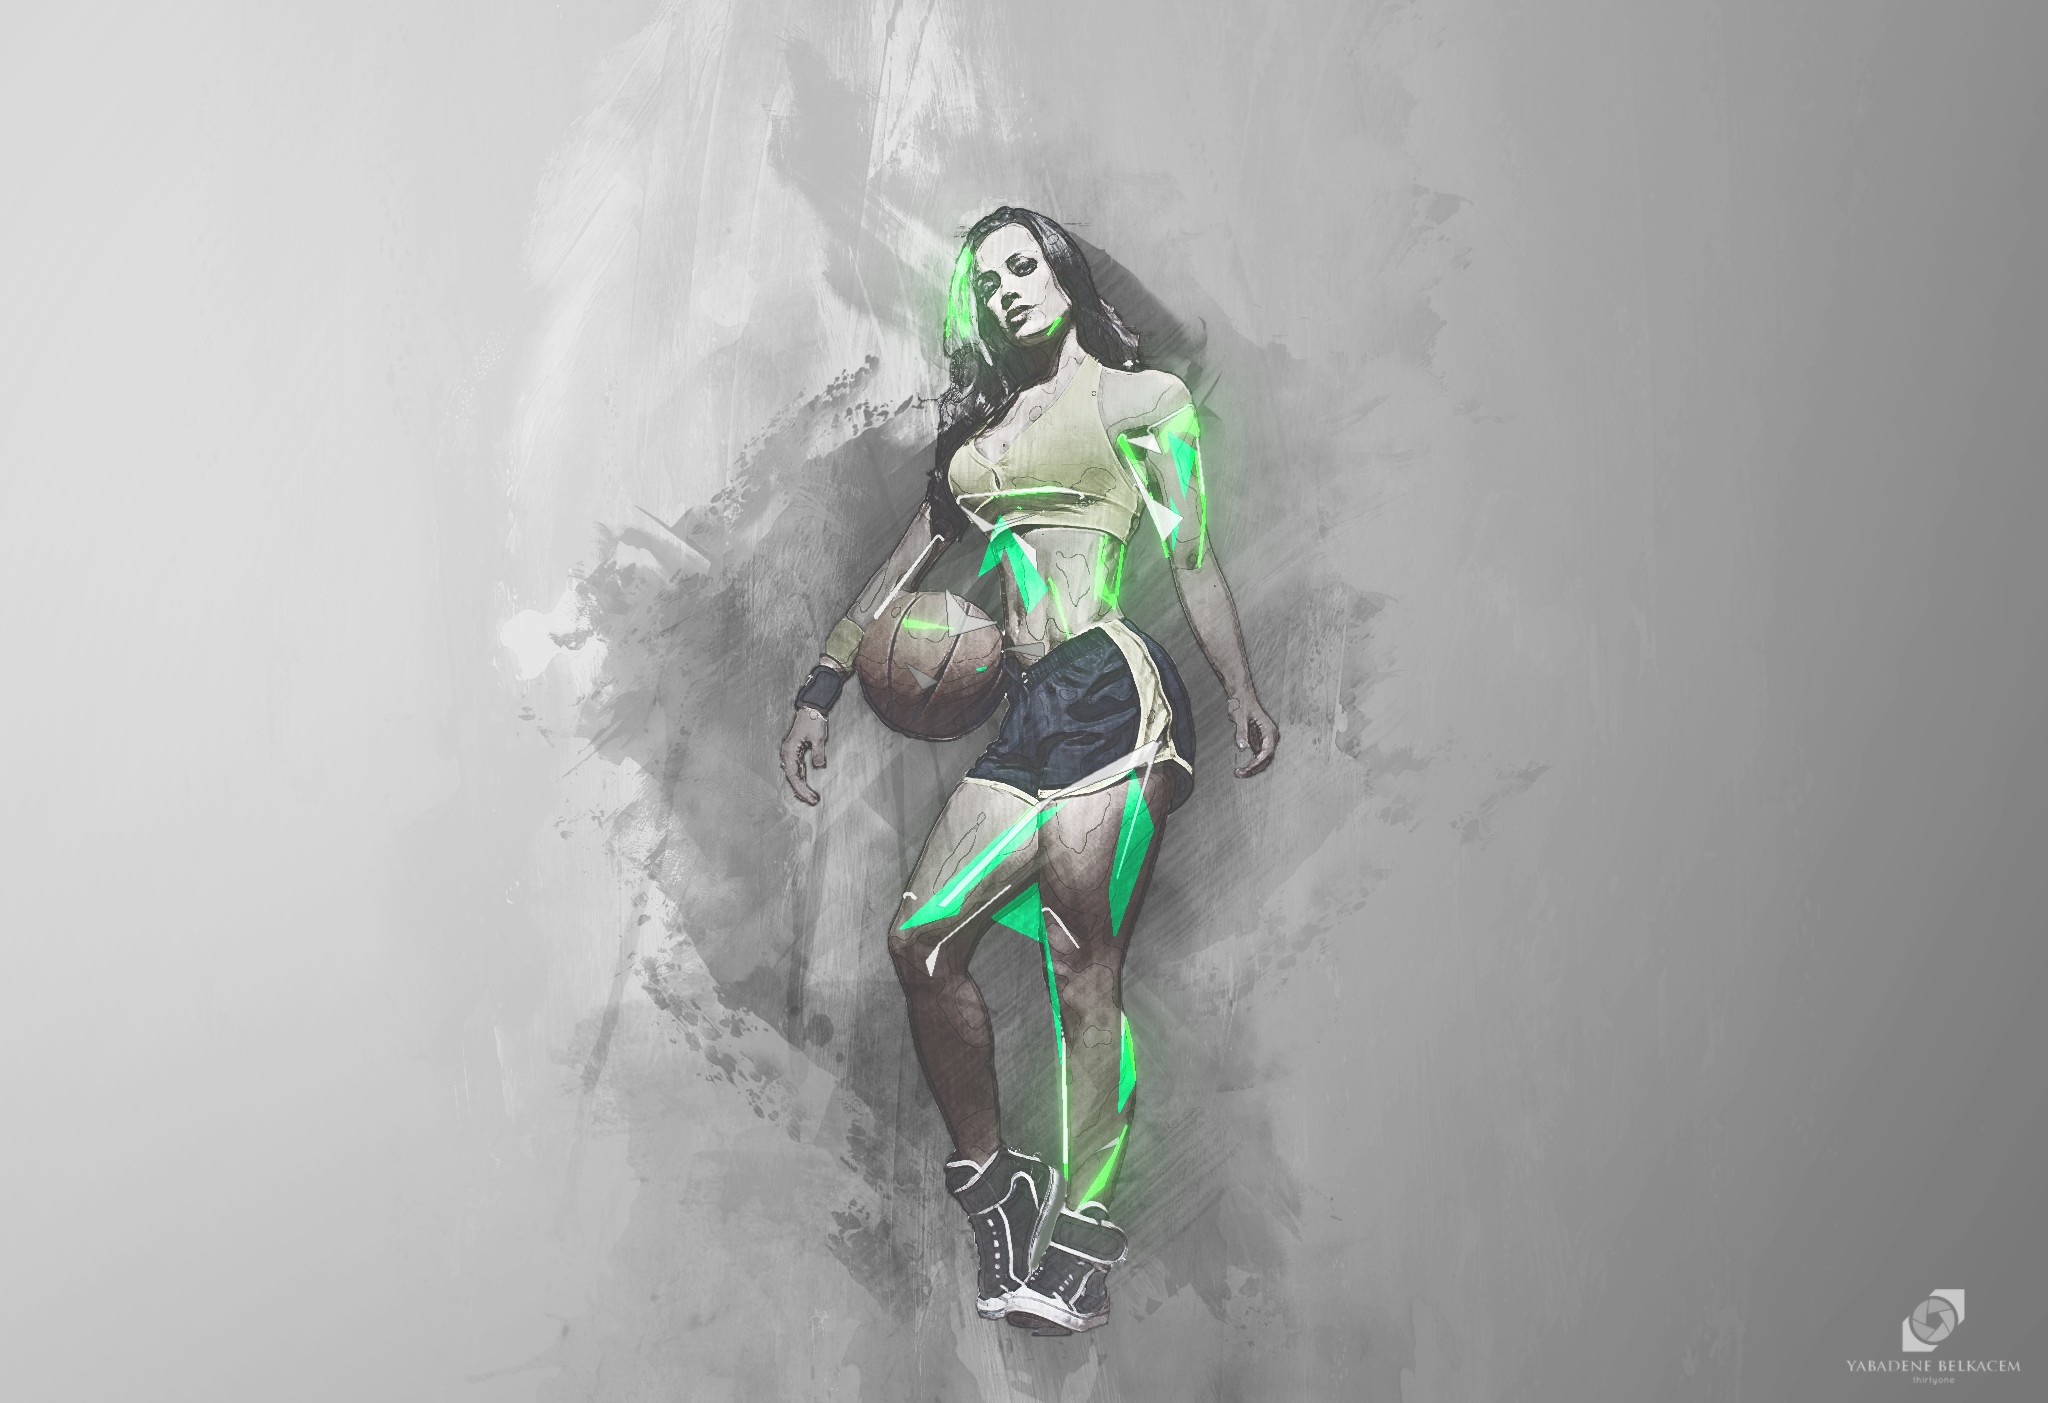 General 2048x1403 basketball women sport running ball abstract artwork digital art watermarked simple background